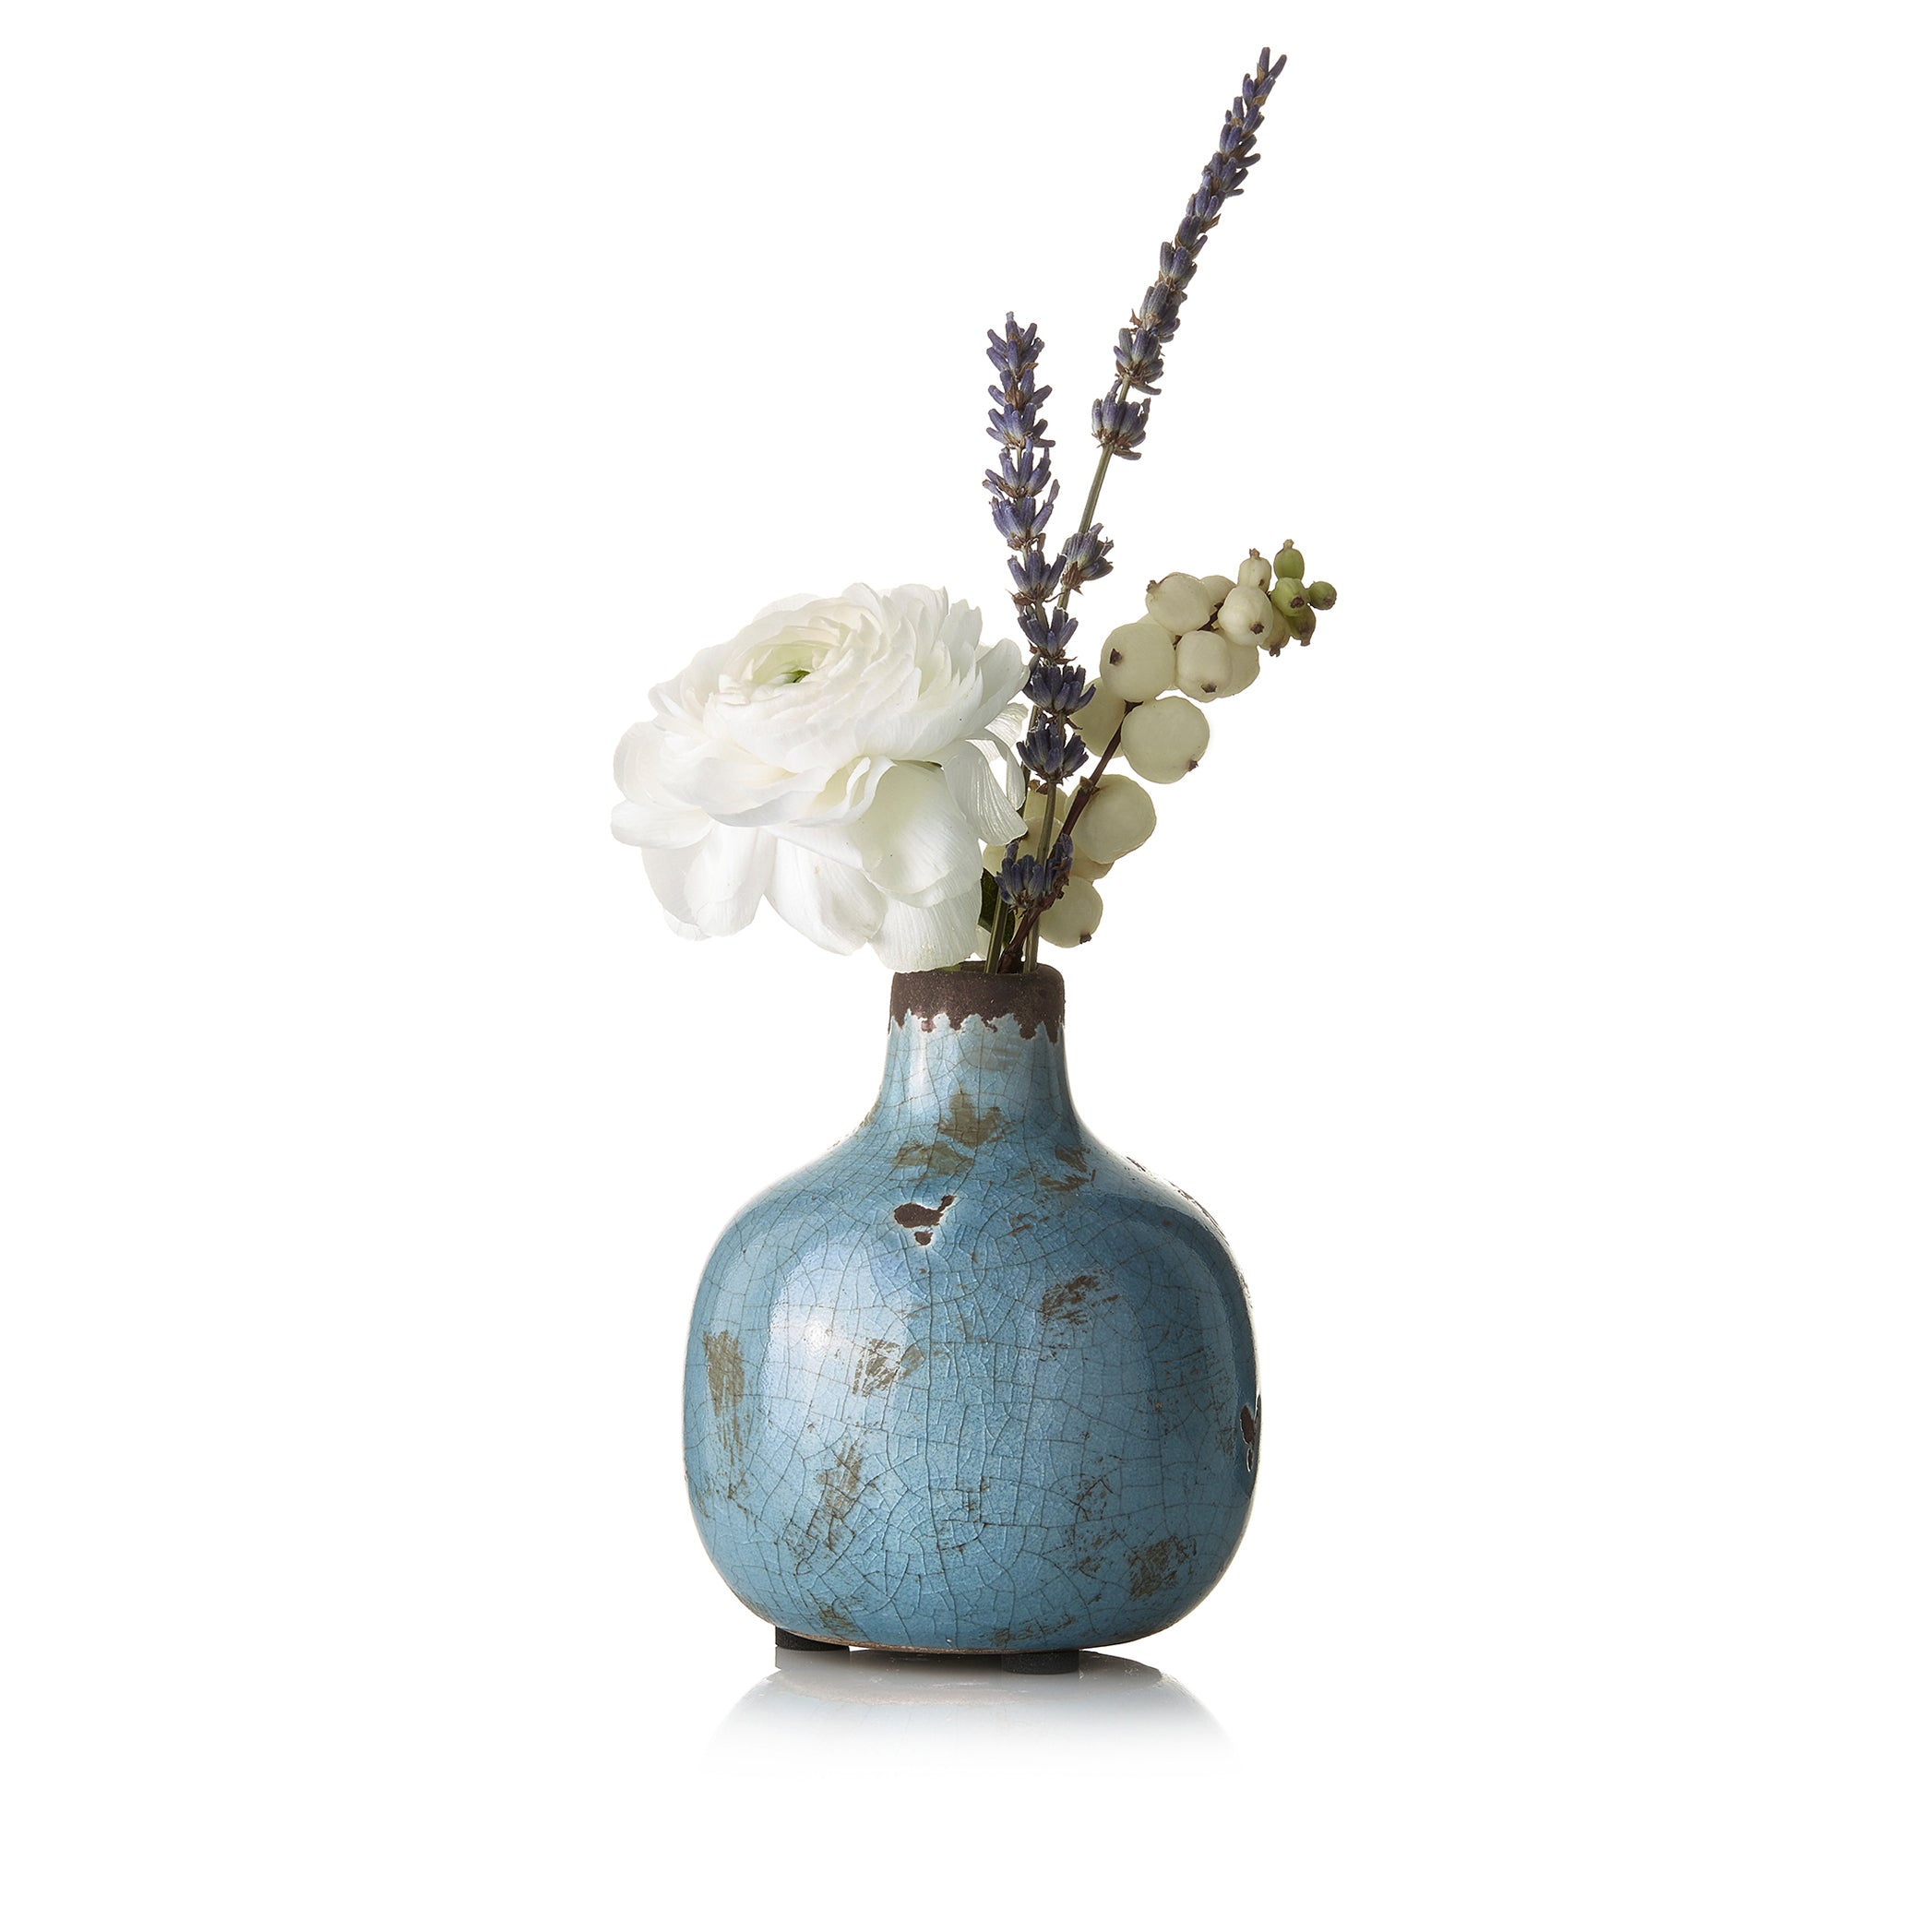 Ceramic Crackled Vase in Grey Blue